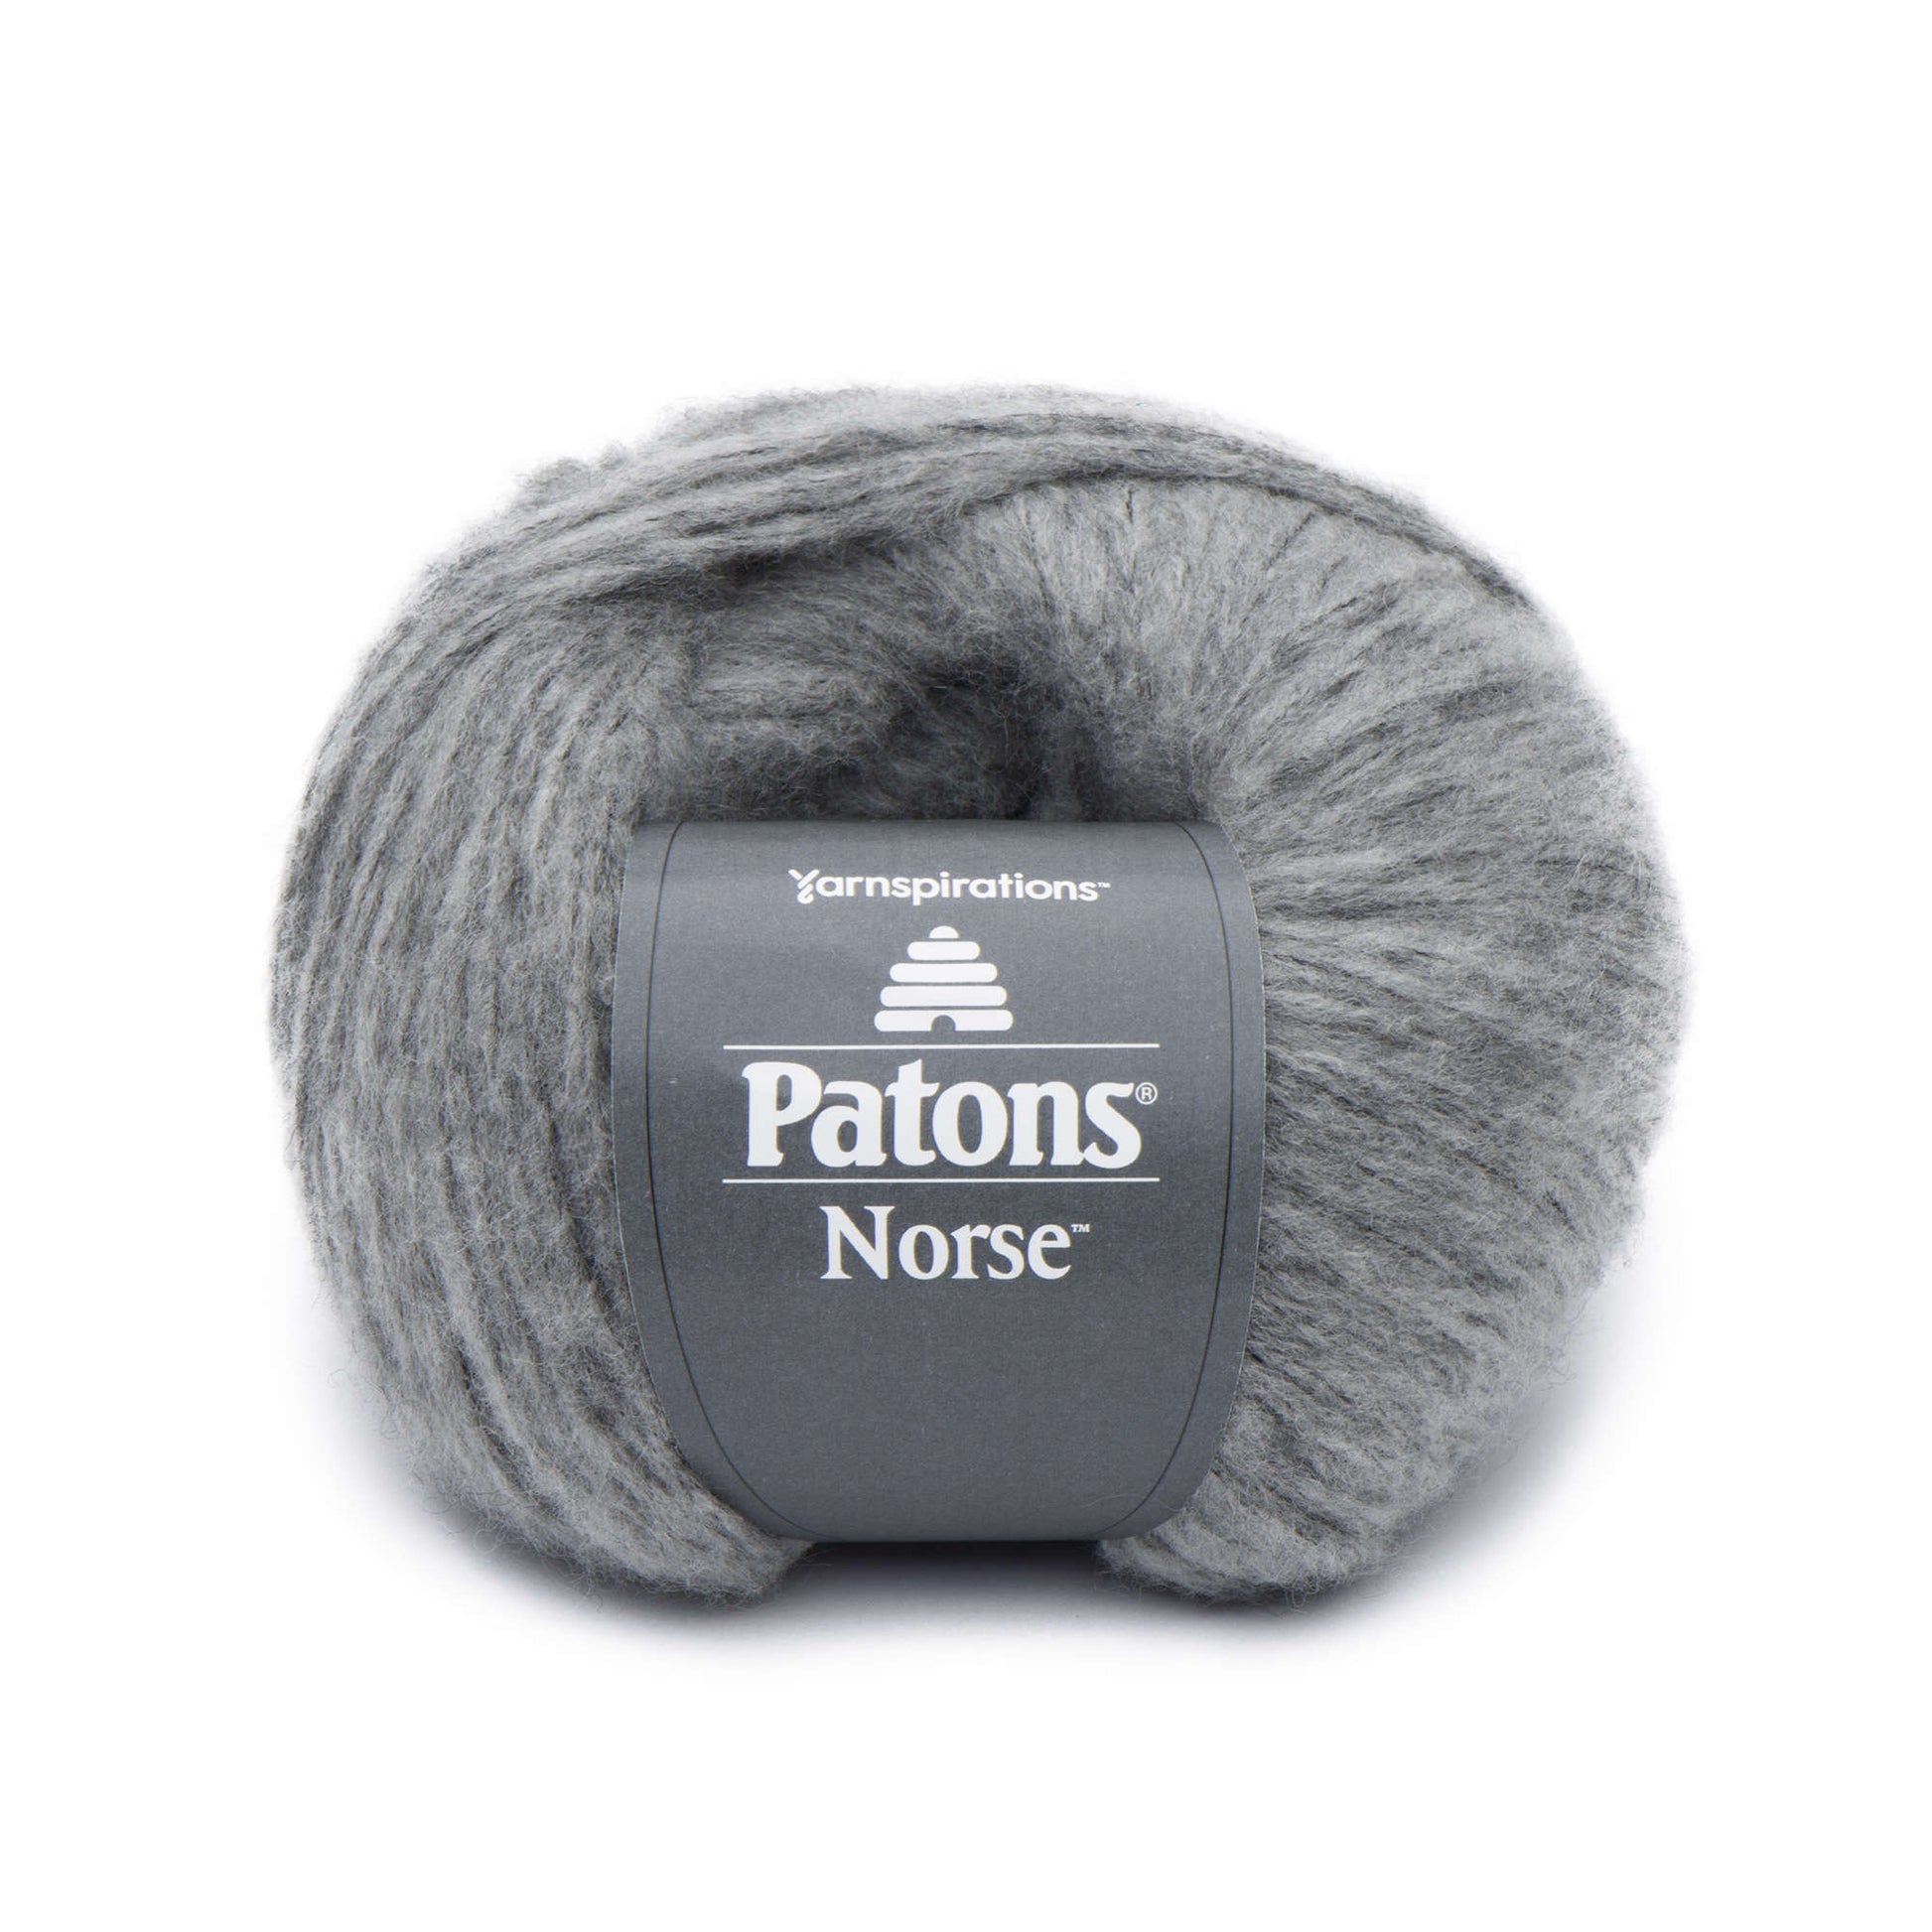 Patons Norse Yarn - Clearance shades Gray Pearl